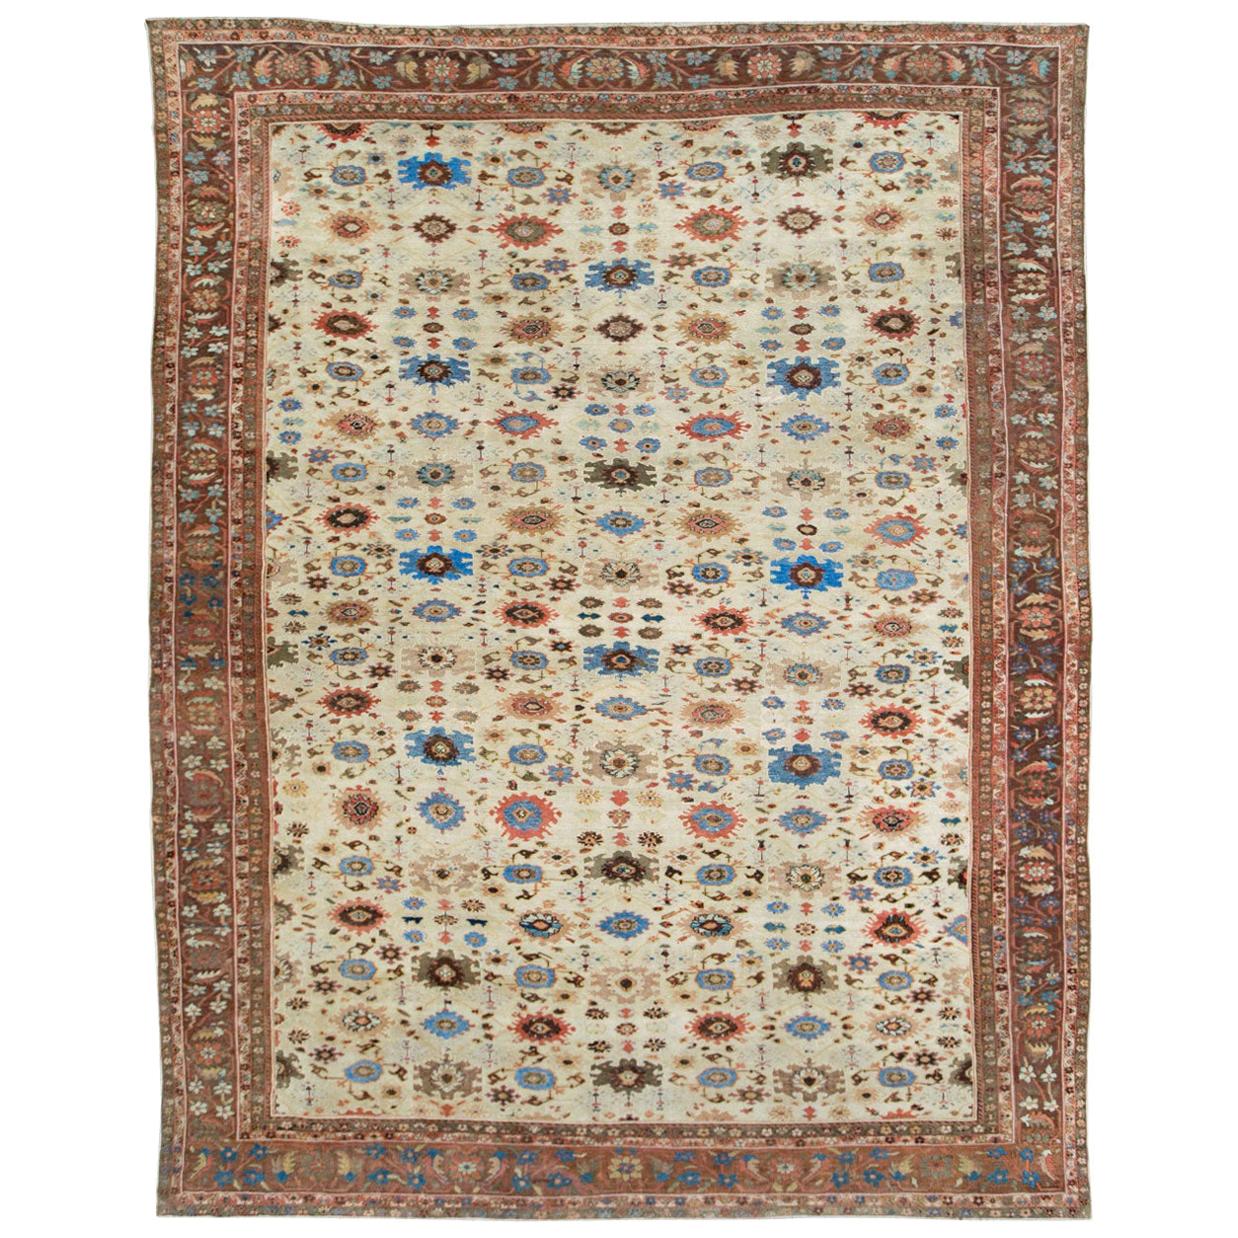 Early 20th Century Handmade Persian Mahal Large Room Size Carpet